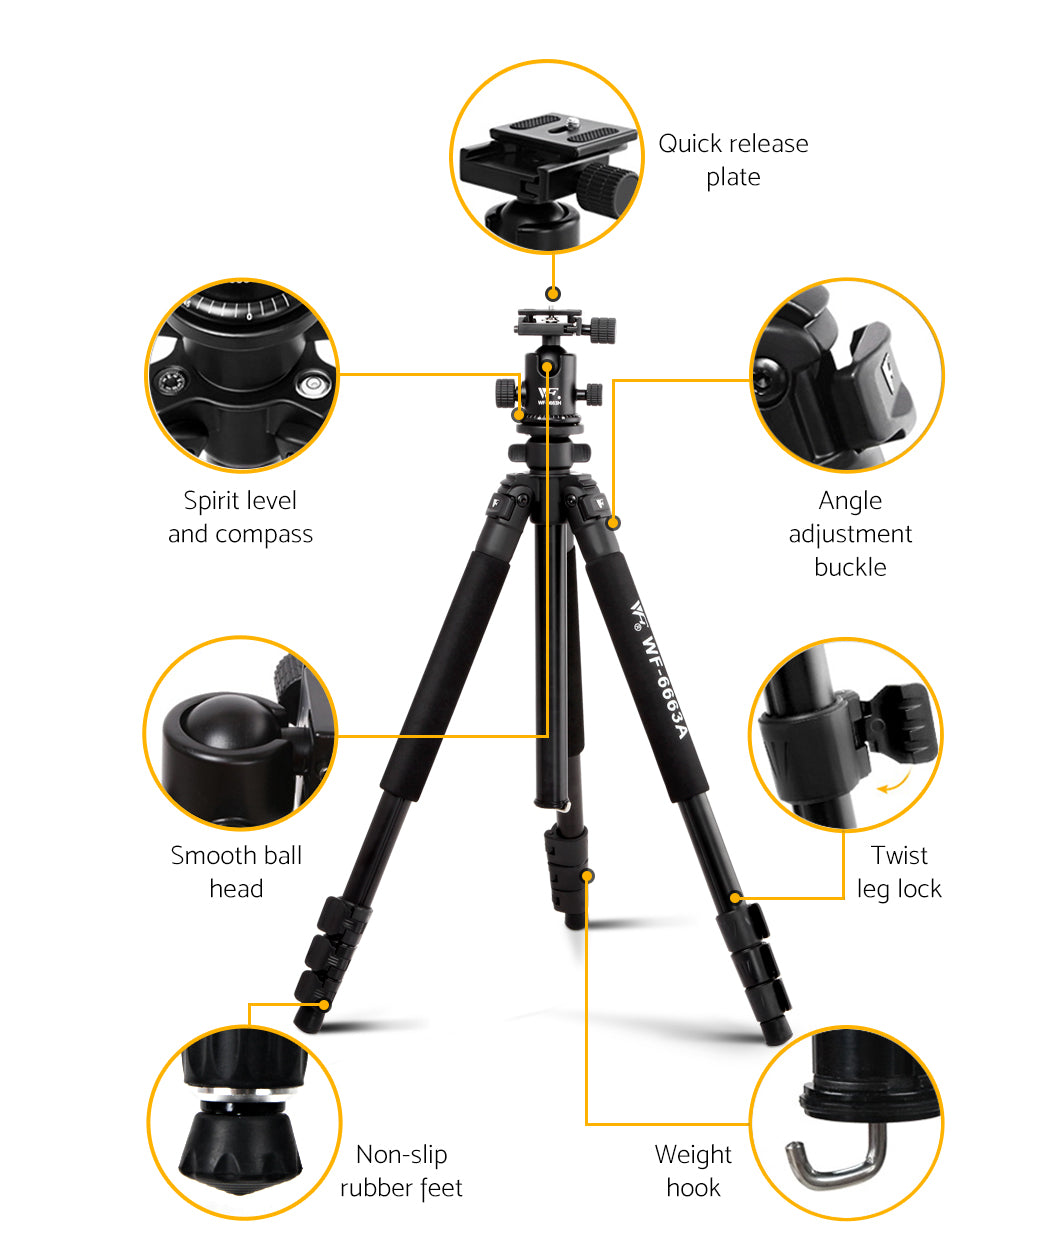 Professional Dslr Camera Tripod Stand, Adjustable 64-173Cm